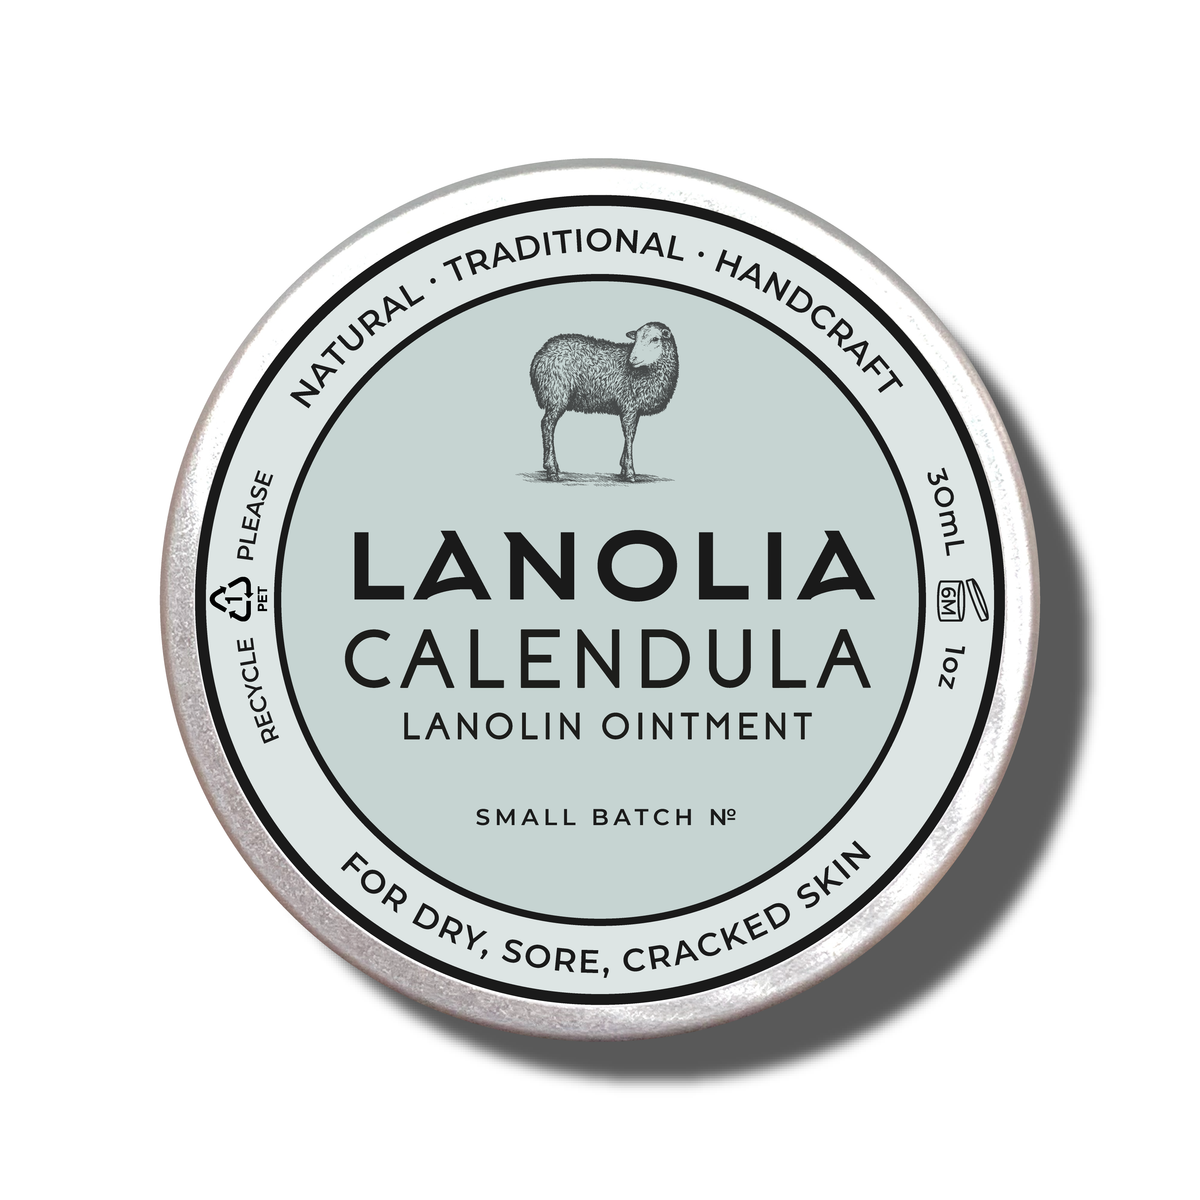 Discontinued］Lansinoh Lanolin Cream 10g 1 Piece 8-9640-11 【AXEL